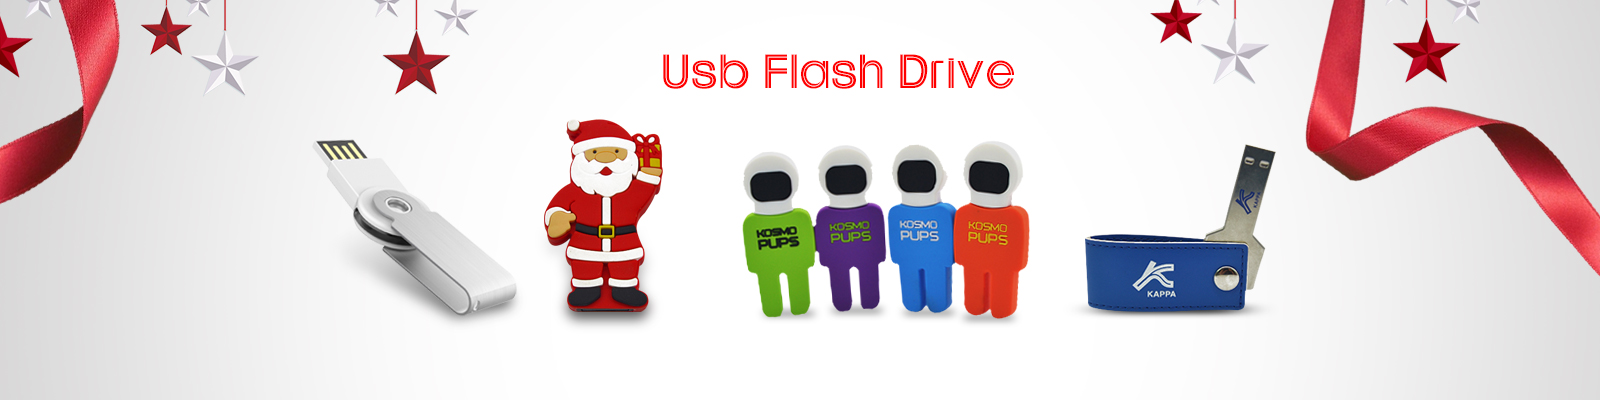 8gb usb flash drive | Logo usb drives | Wooden usb drive | leadway group limited